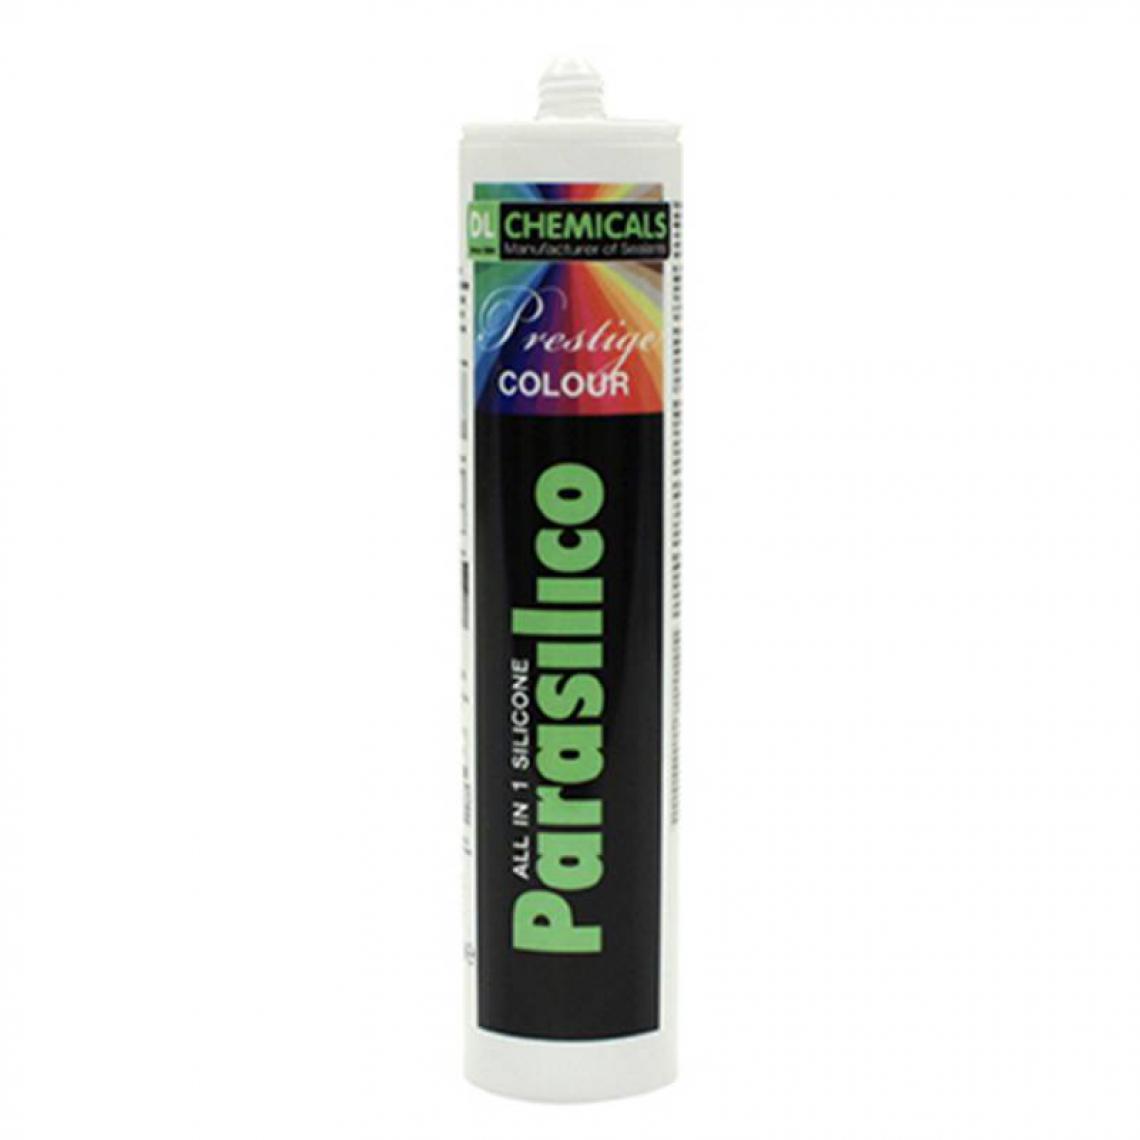 Dl Chemicals - Silicone Parasilico Prestige colour noisette 300mL - Mastic, silicone, joint